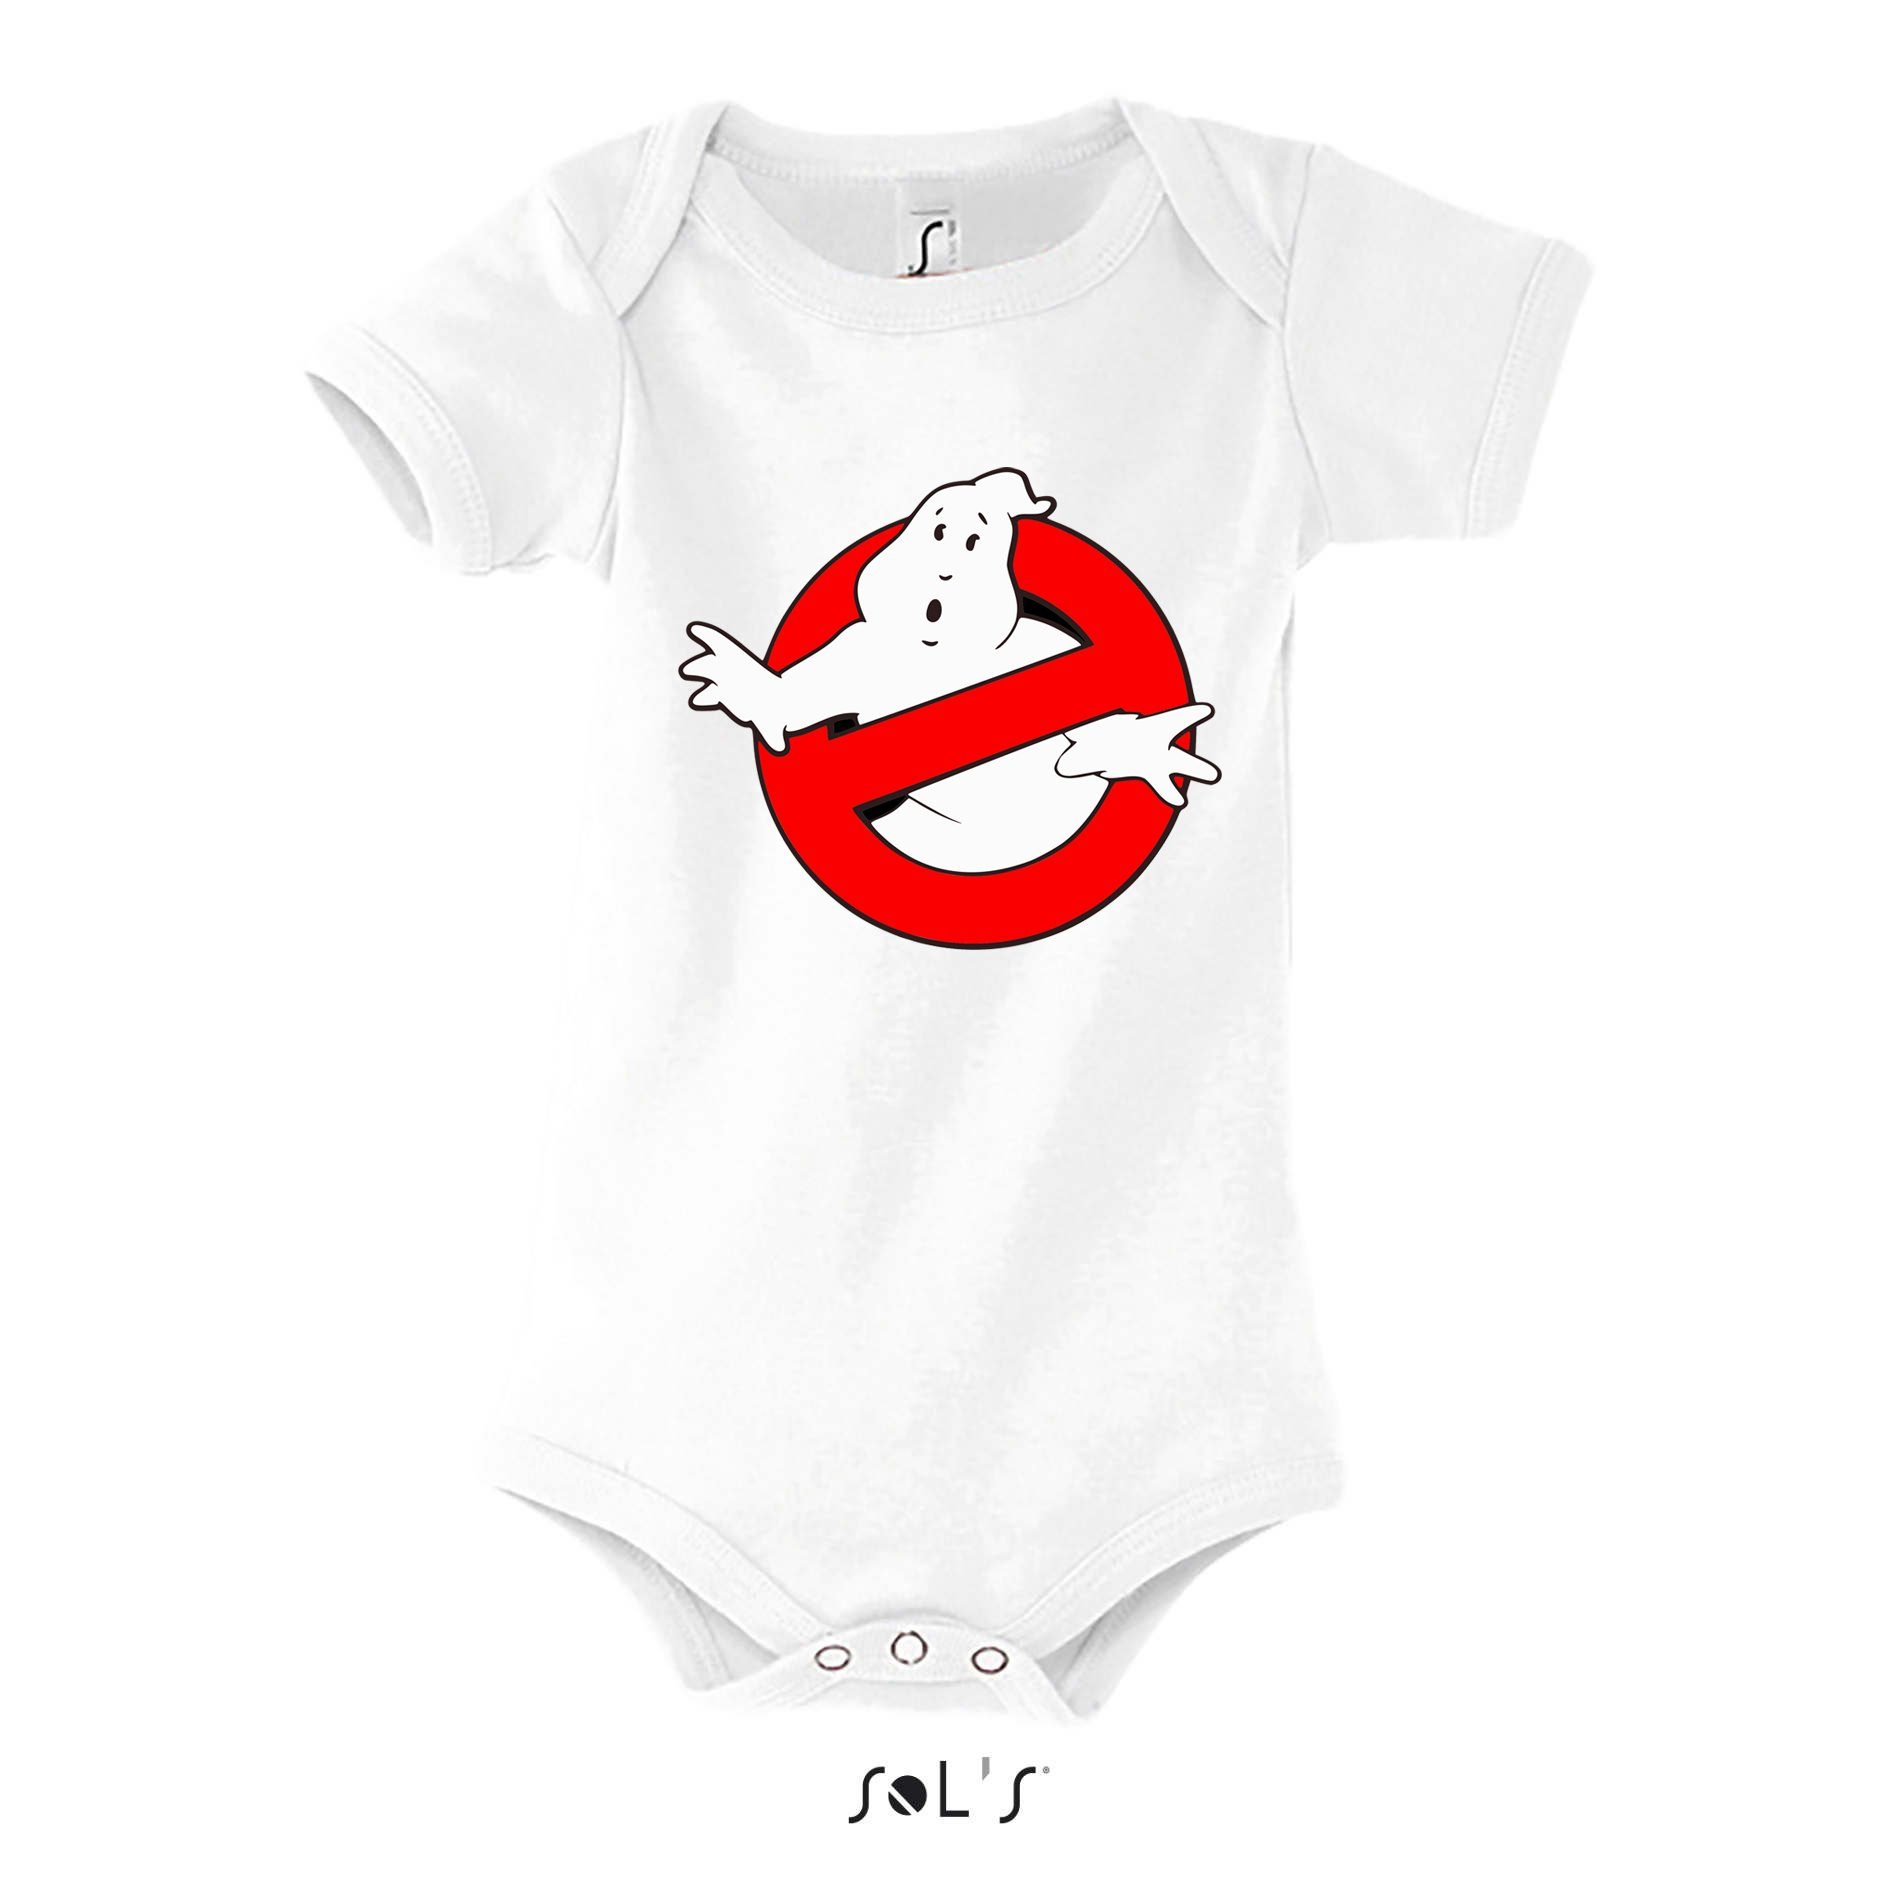 Blondie & Kinder Ghostbusters Strampler Baby mit Ghost Weiß Brownie Geister Geisterjäger Druckknopf